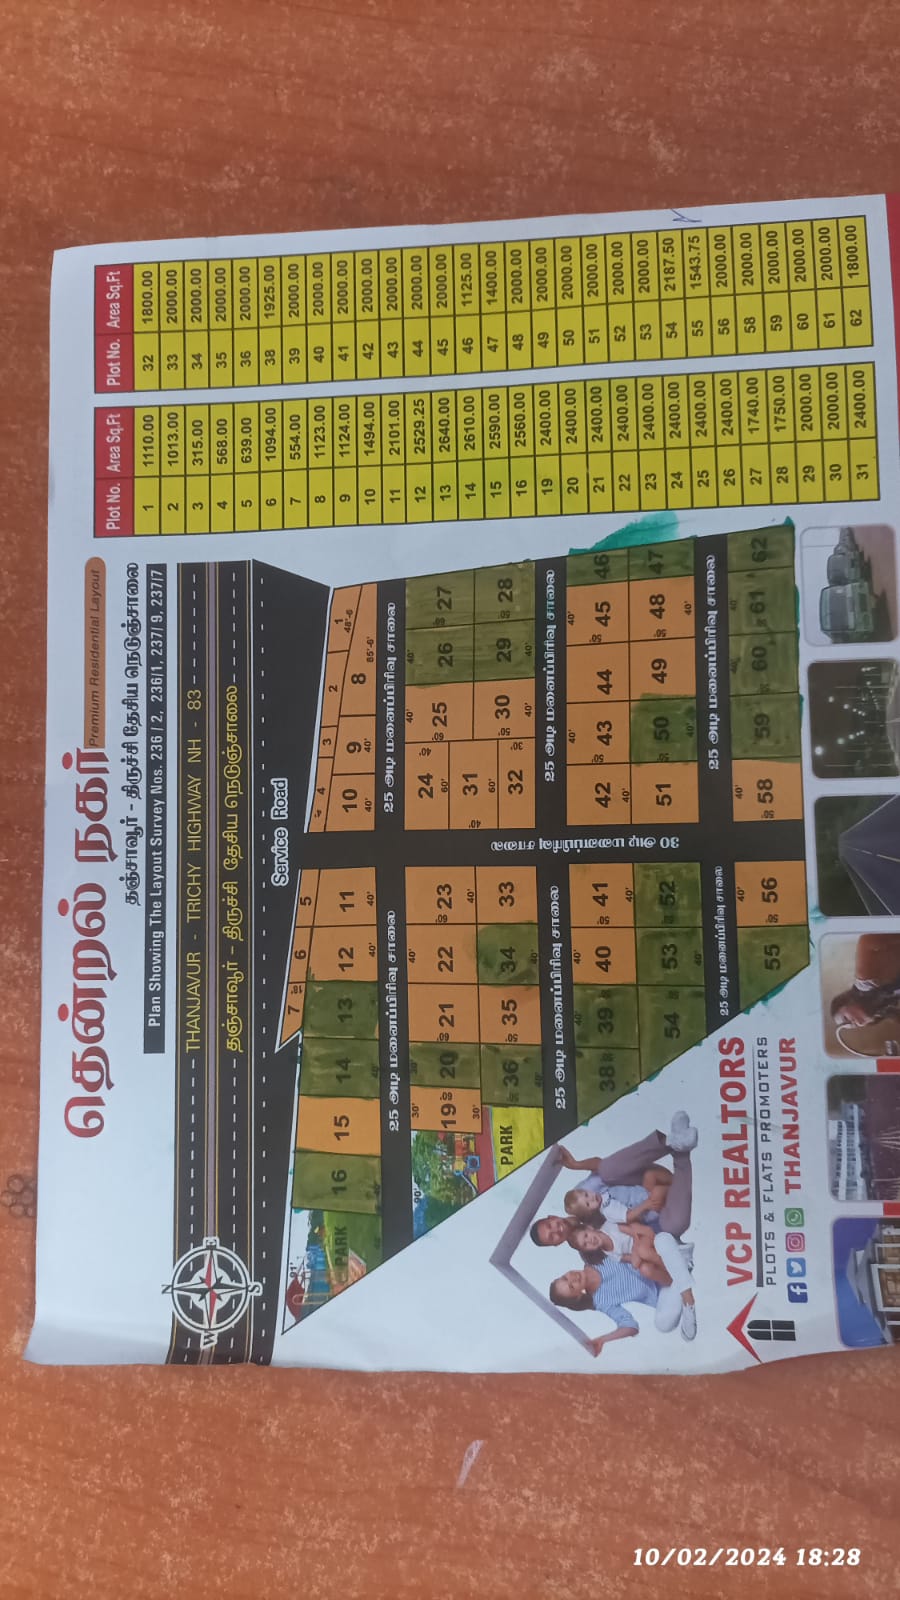 1200 sqft Plots & Land for Sale in Sengipatti